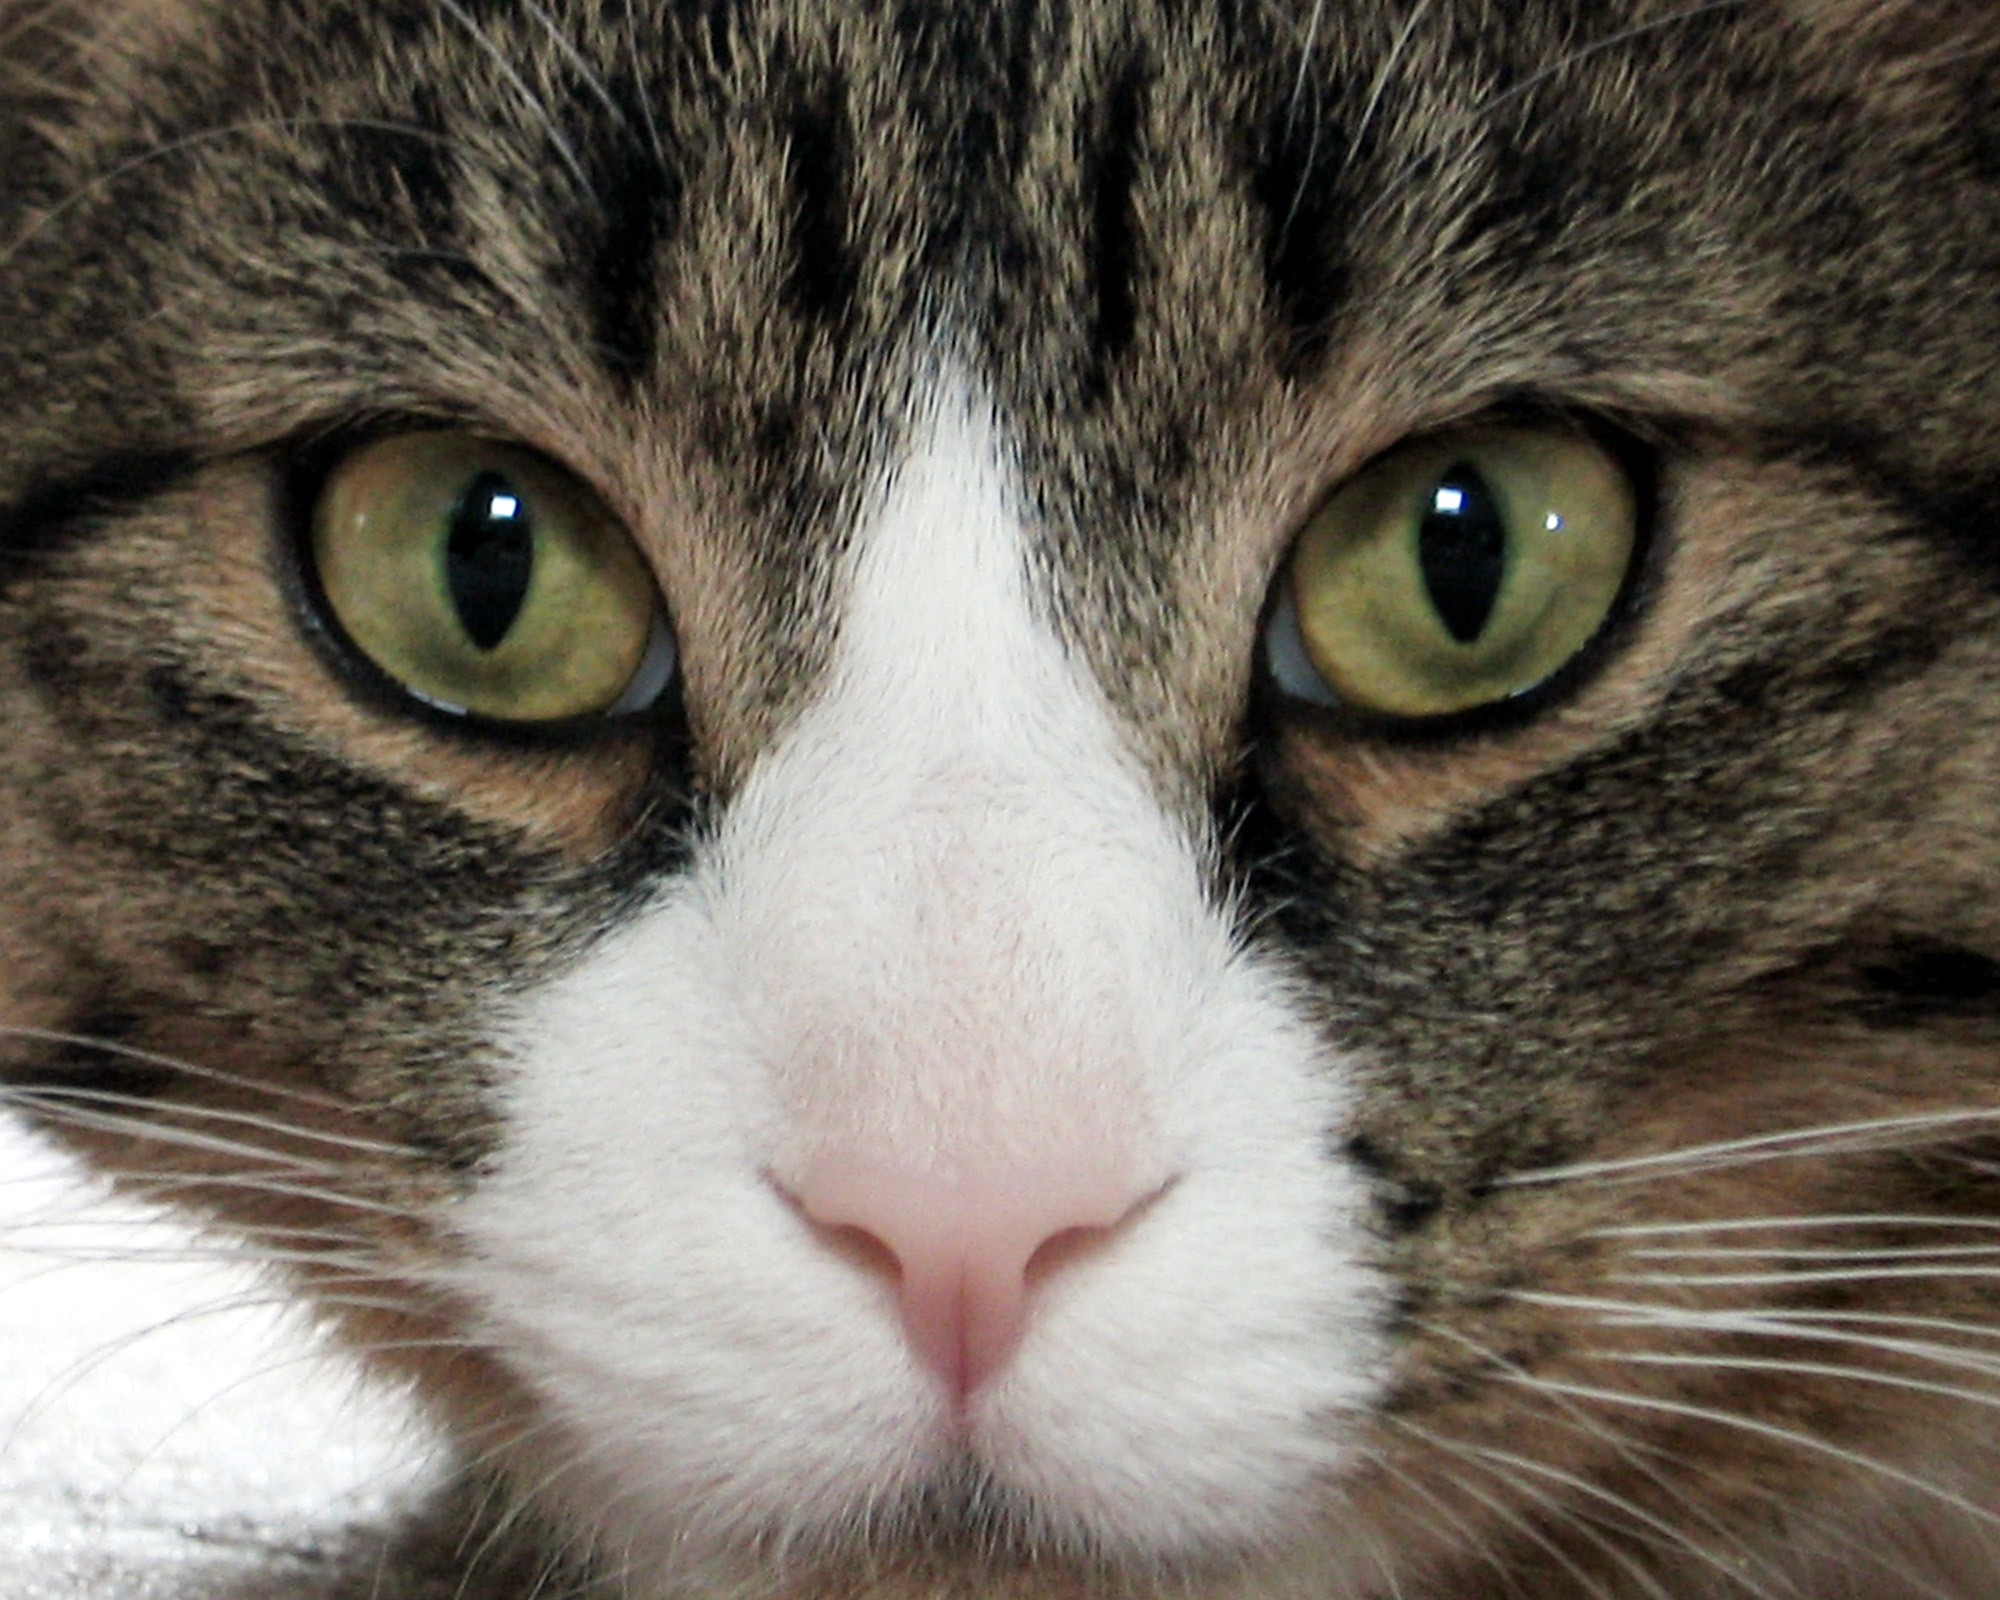 How cat got feline leukemia baffles one family Chicago Tribune